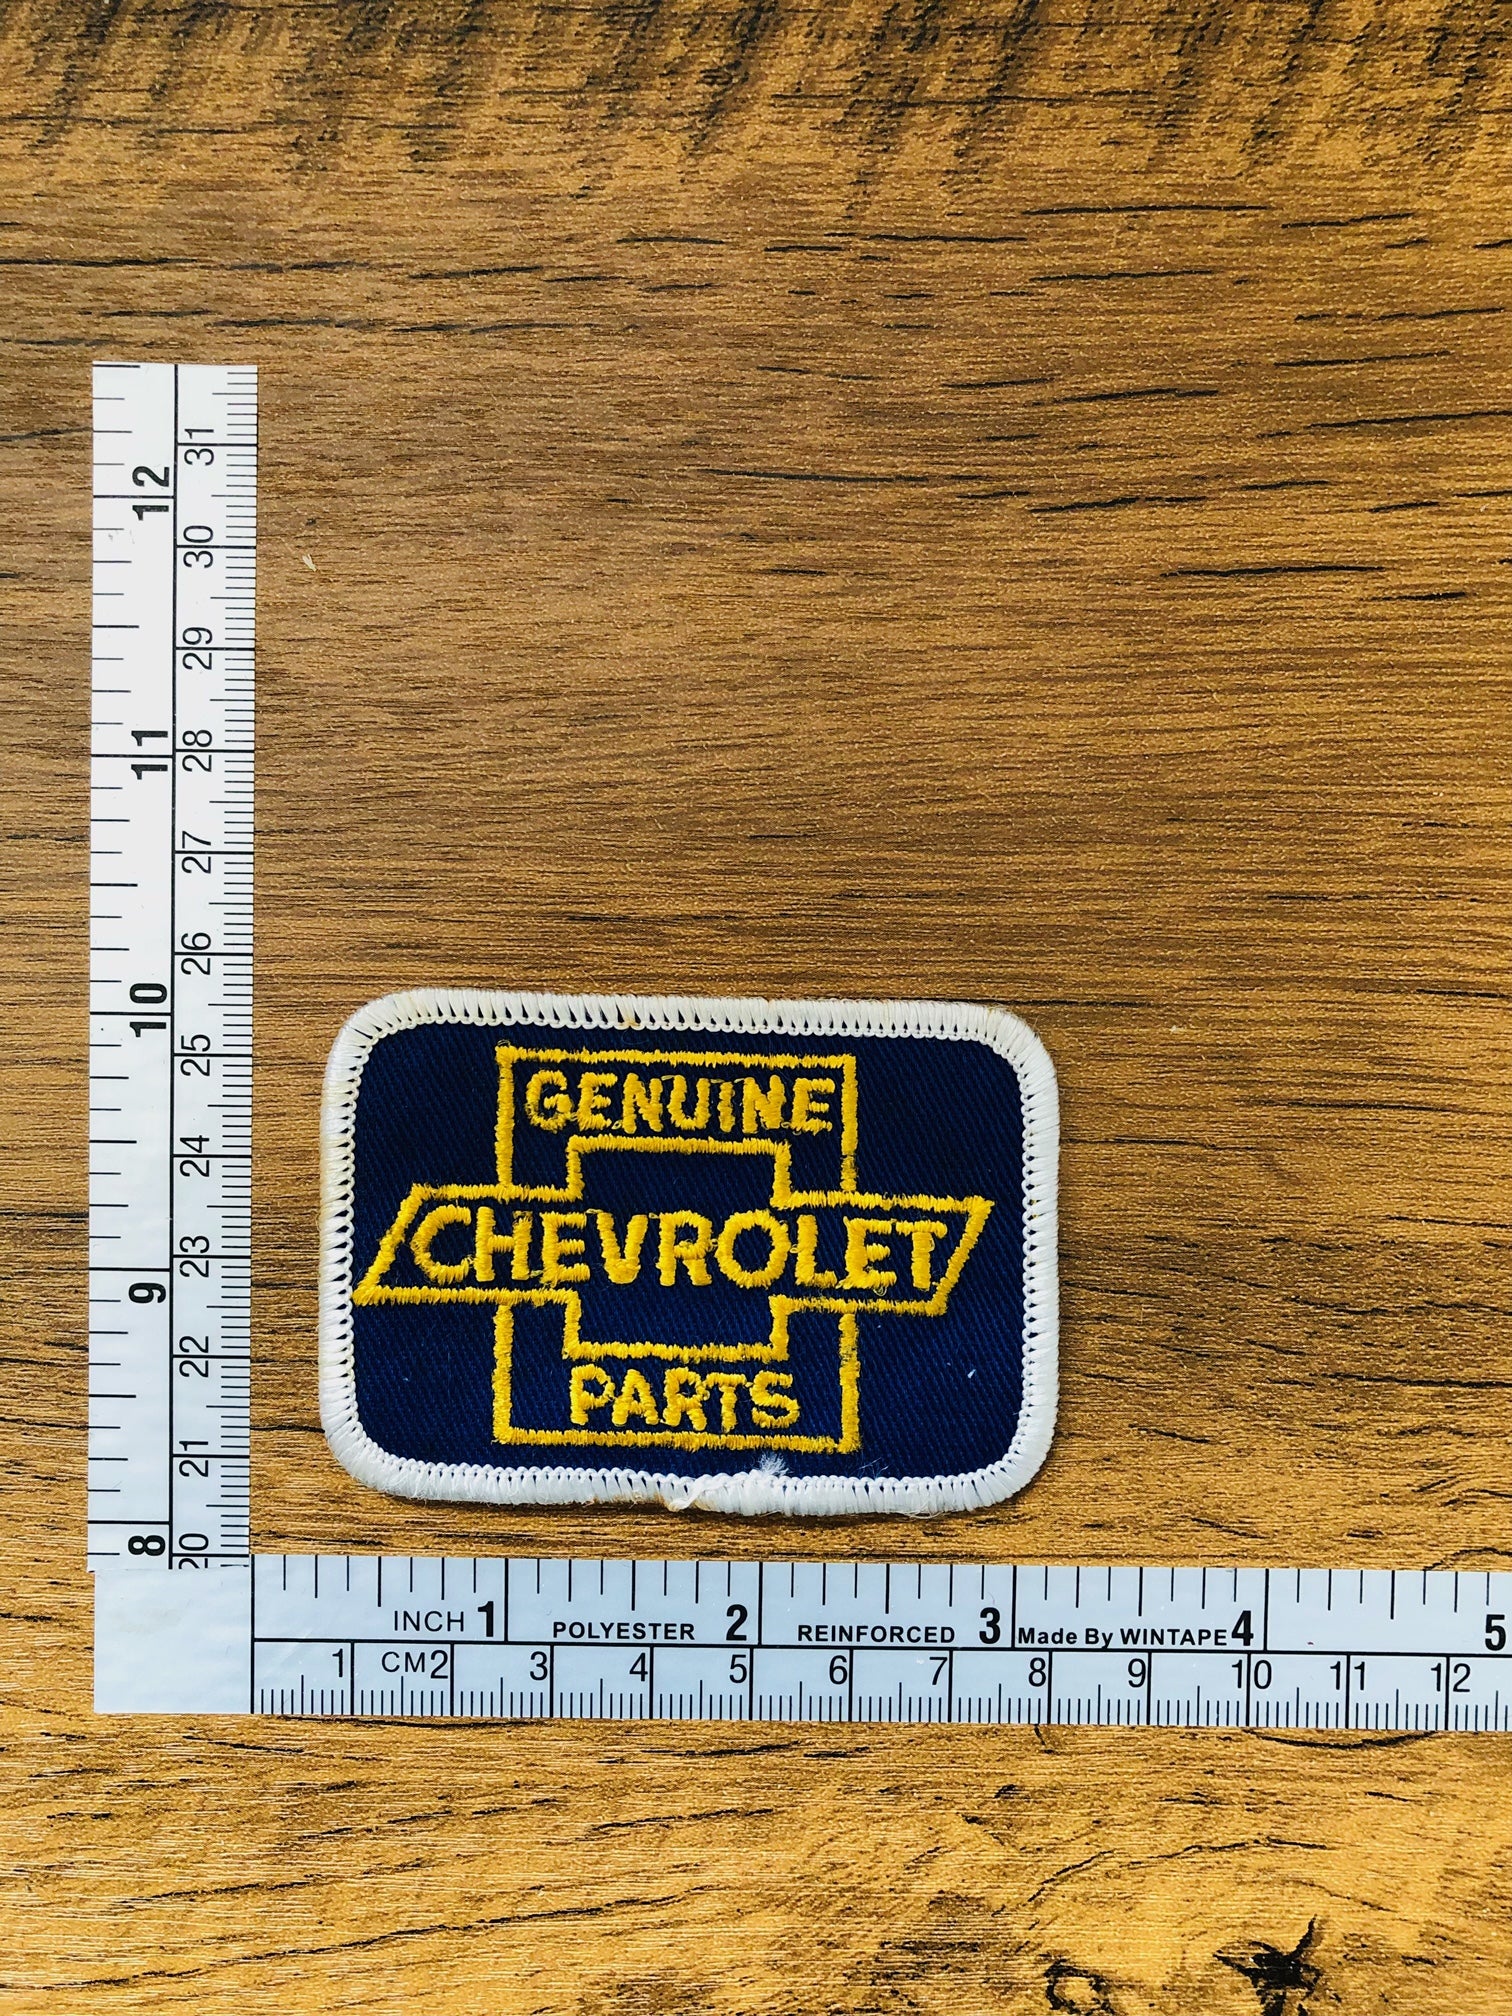 Vintage Genuine Chevrolet Parts